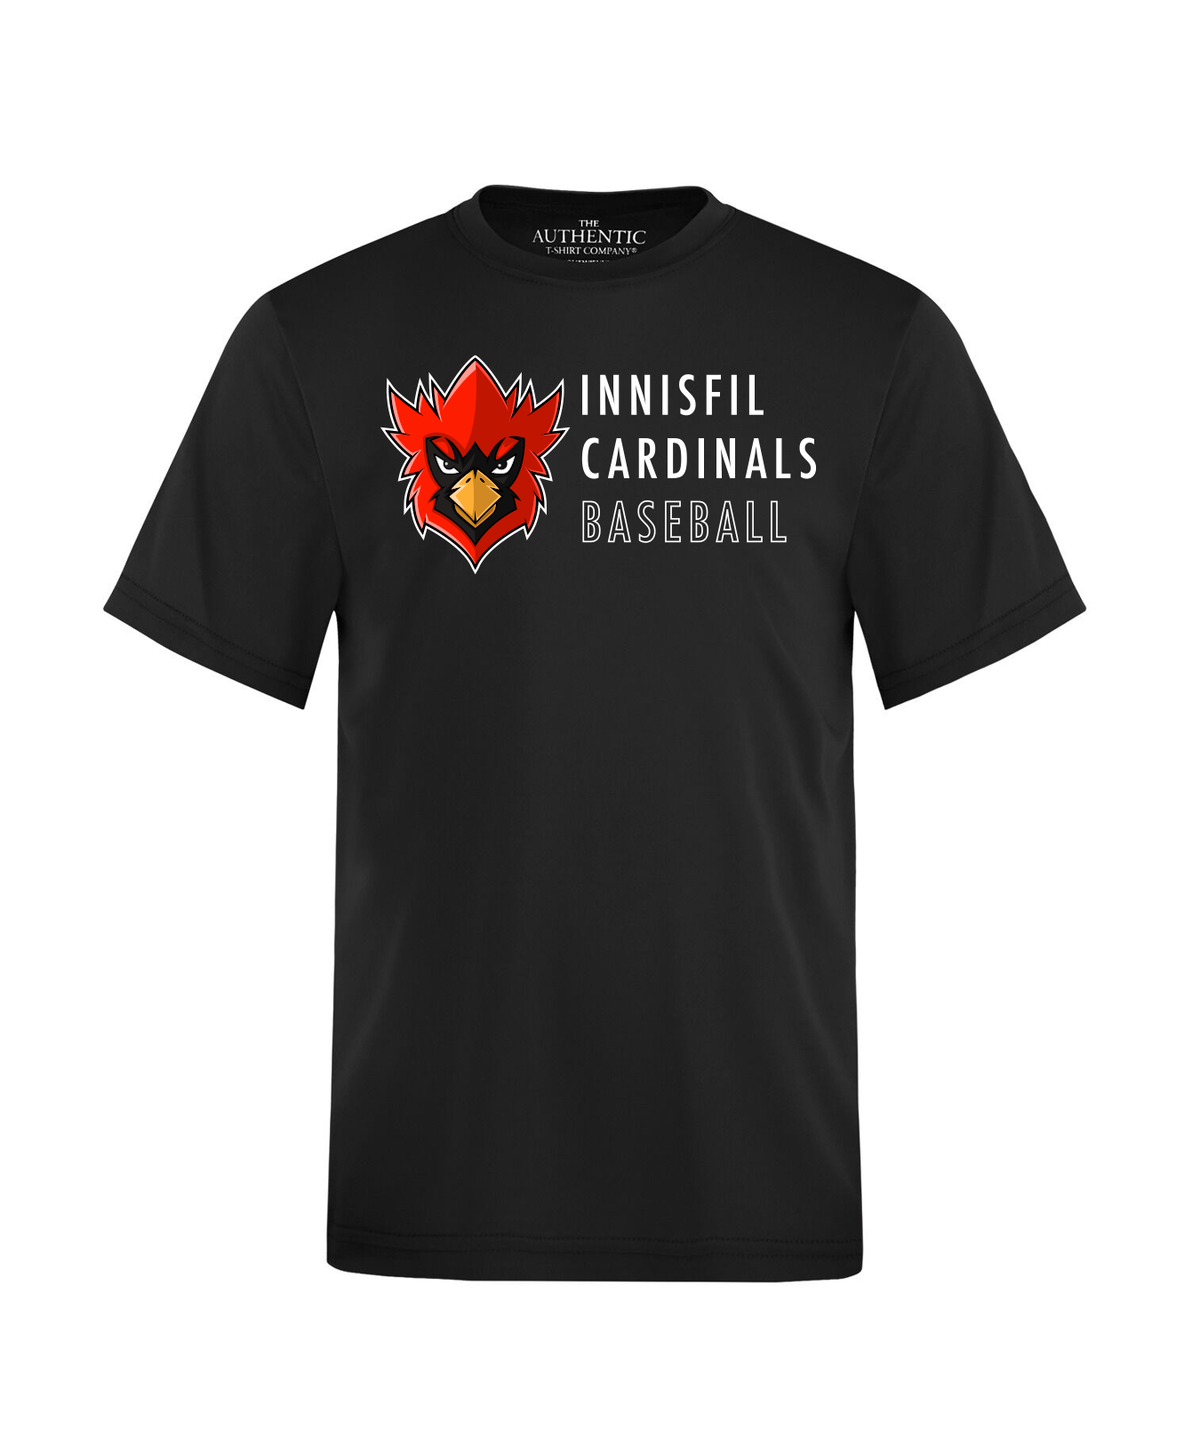 Innisfil Cardinals Pre-Game T-Shirt - Black